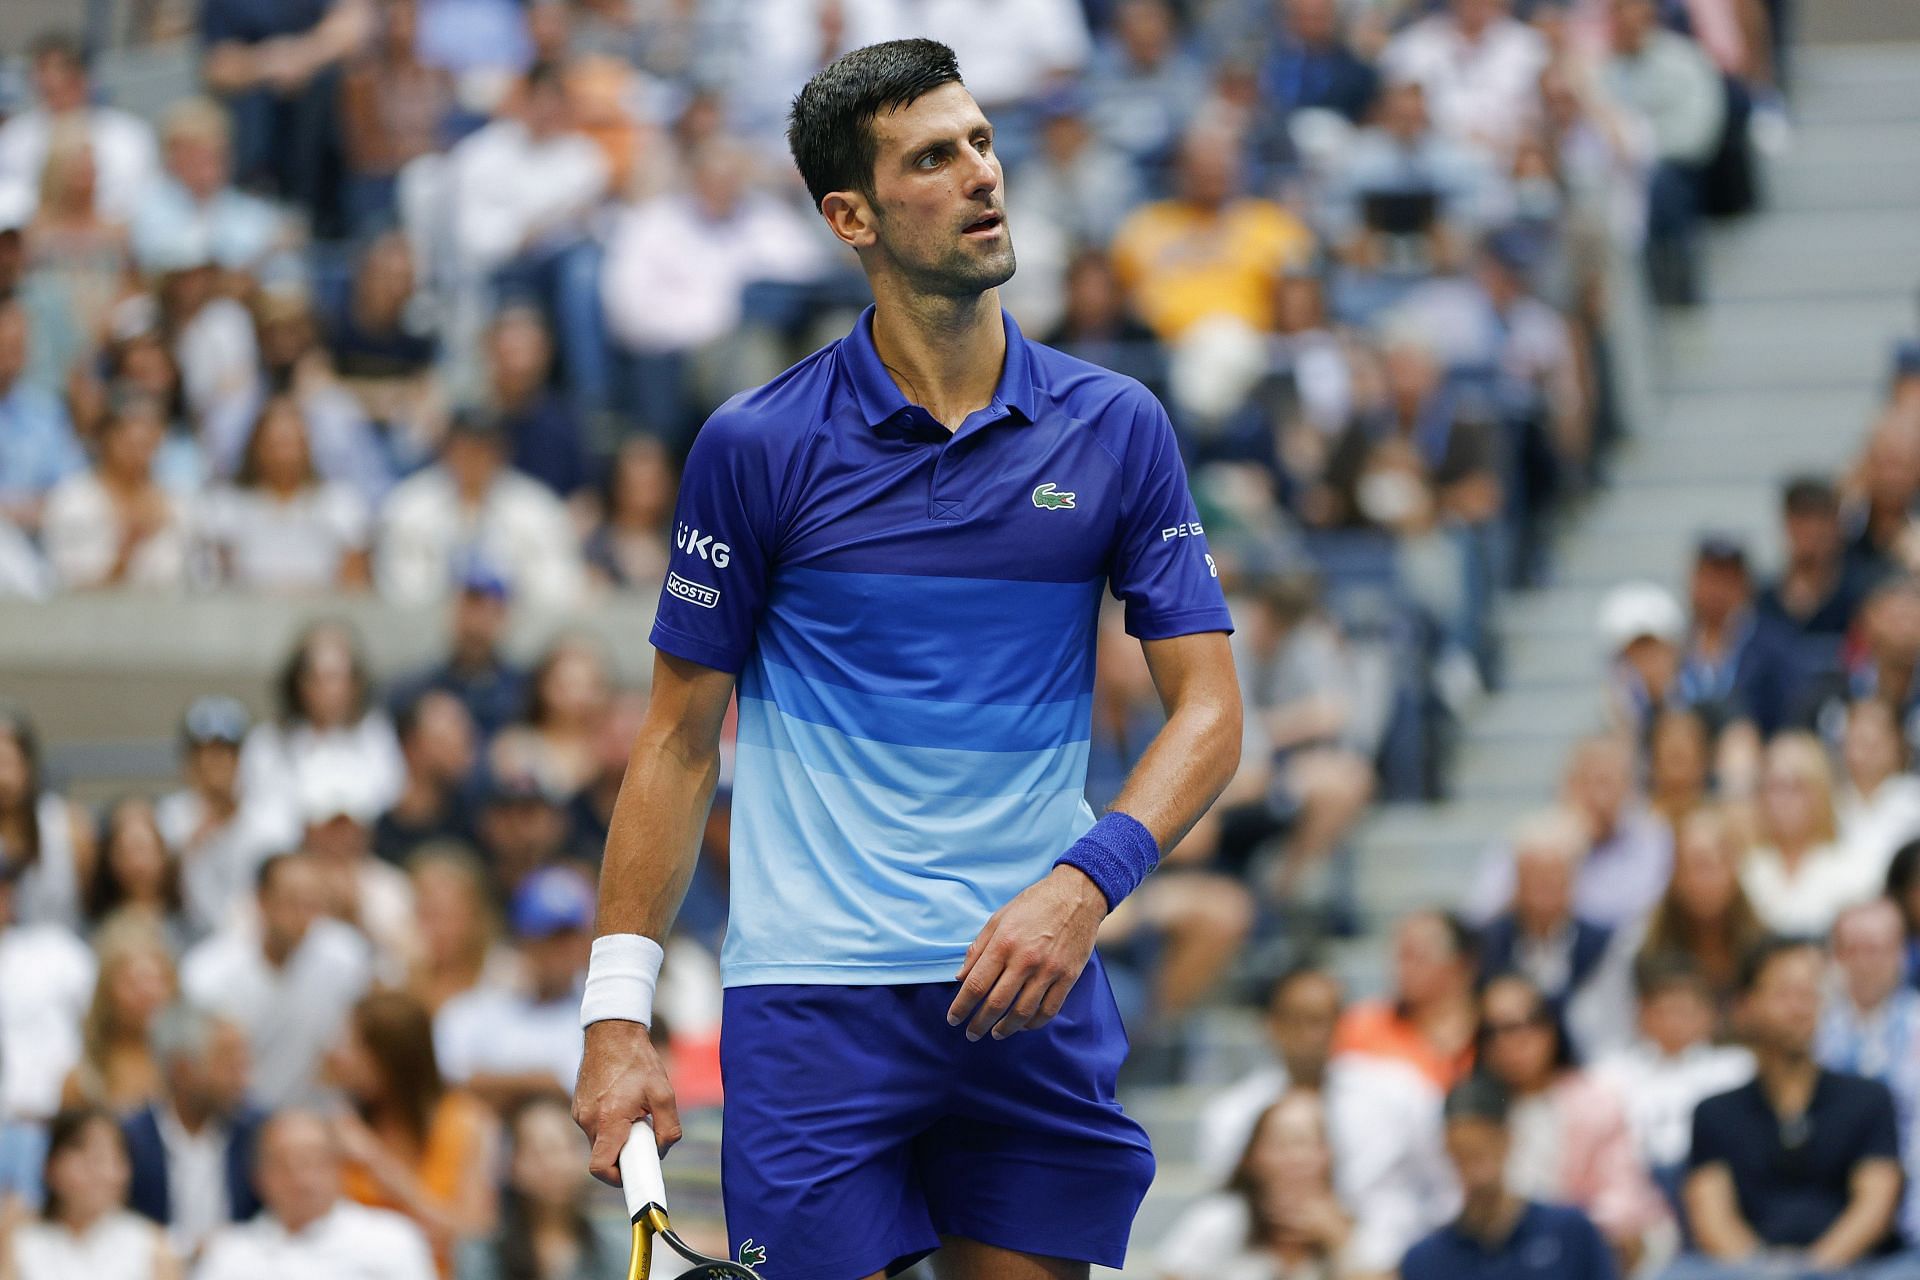 Novak Djokovic at the 2021 US Open.